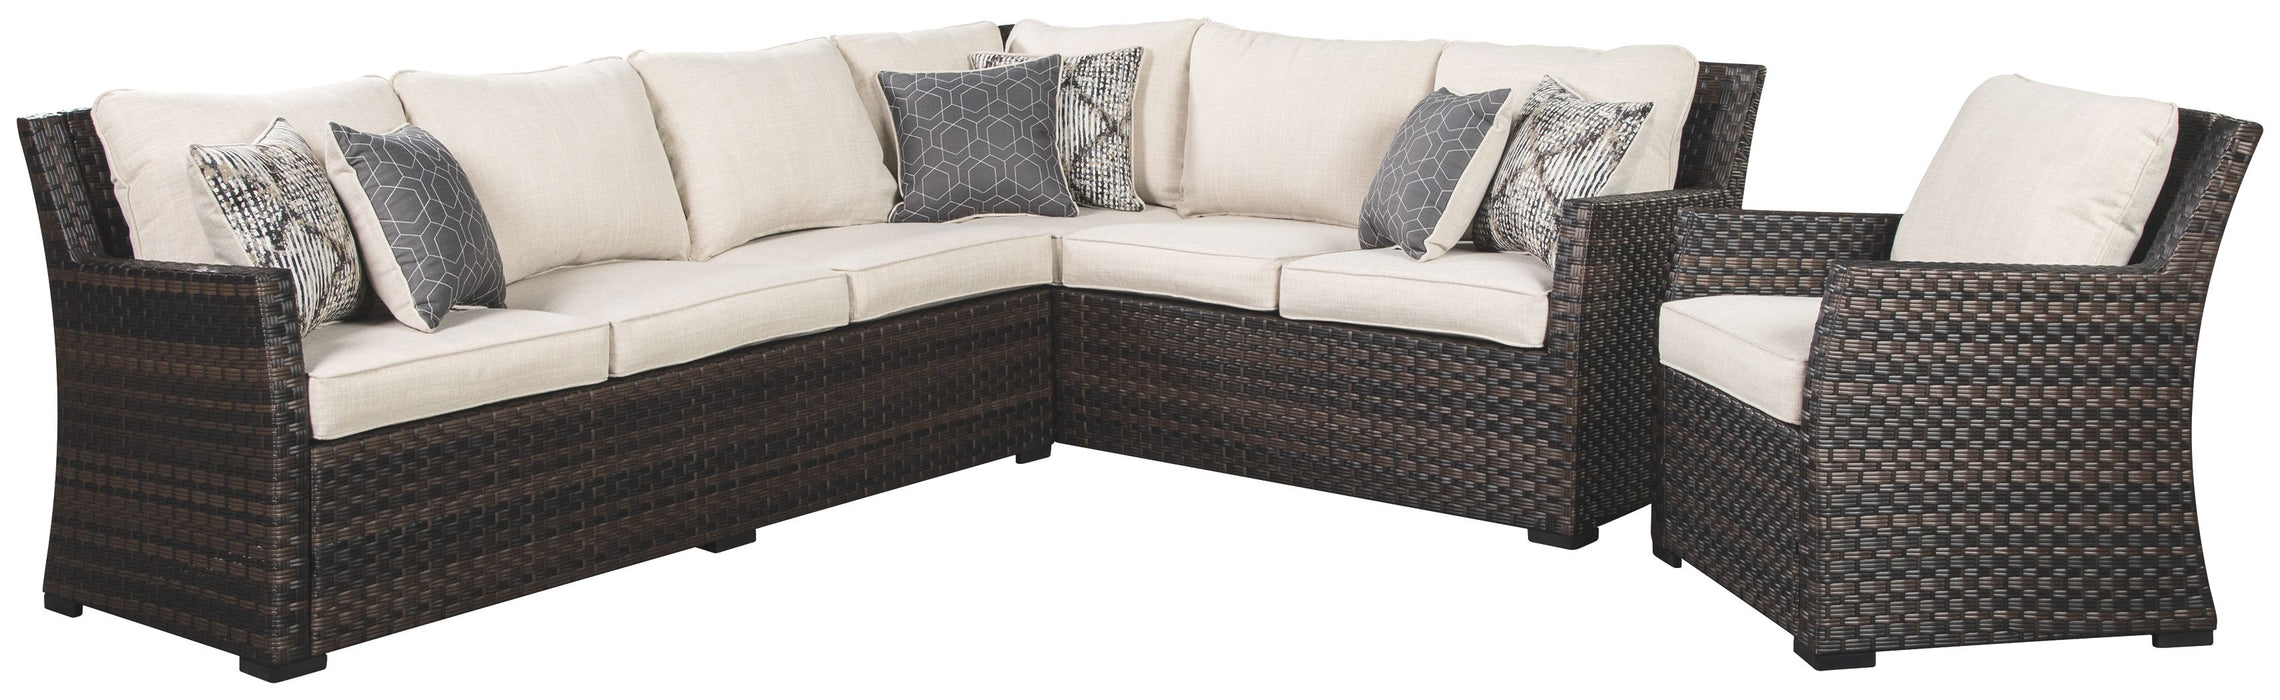 Easy - Dark Brown / Beige - Sofa Sec/chair W/Cush (Set of 3) Capital Discount Furniture Home Furniture, Furniture Store